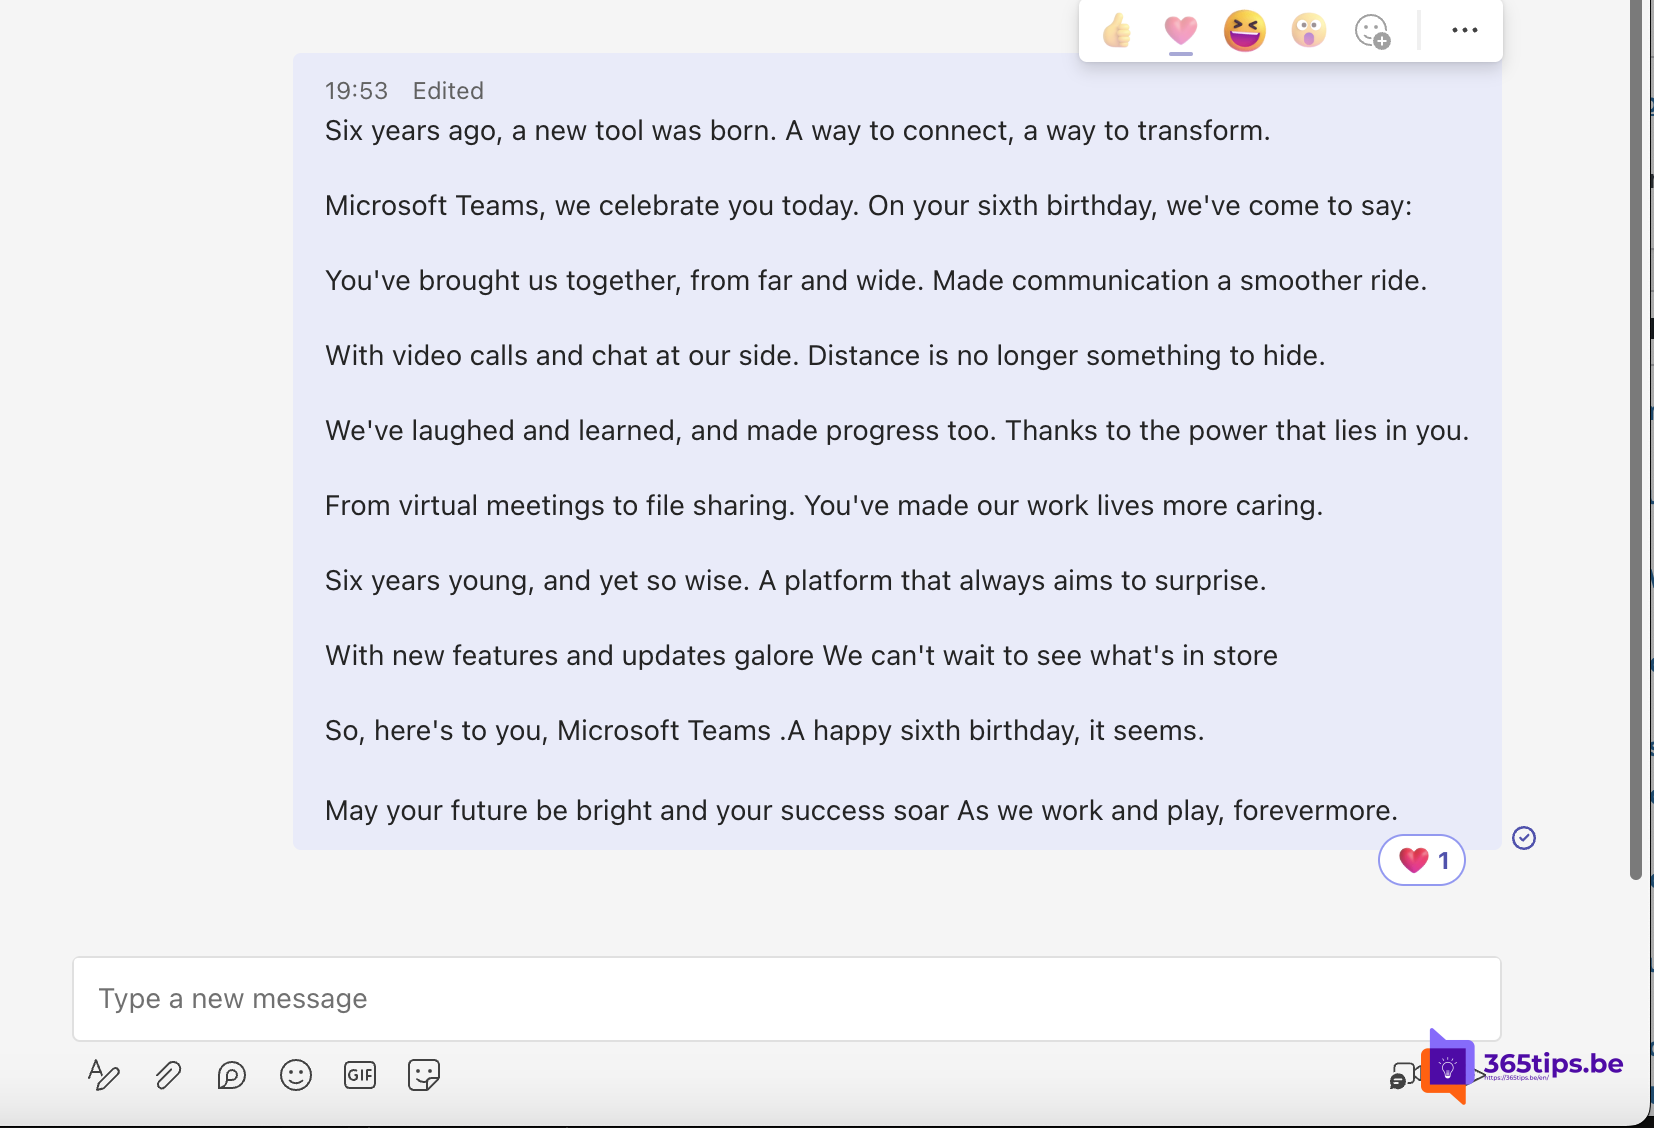 Alles Gute zum 6. Geburtstag, Microsoft Teams! 🎉 🎈